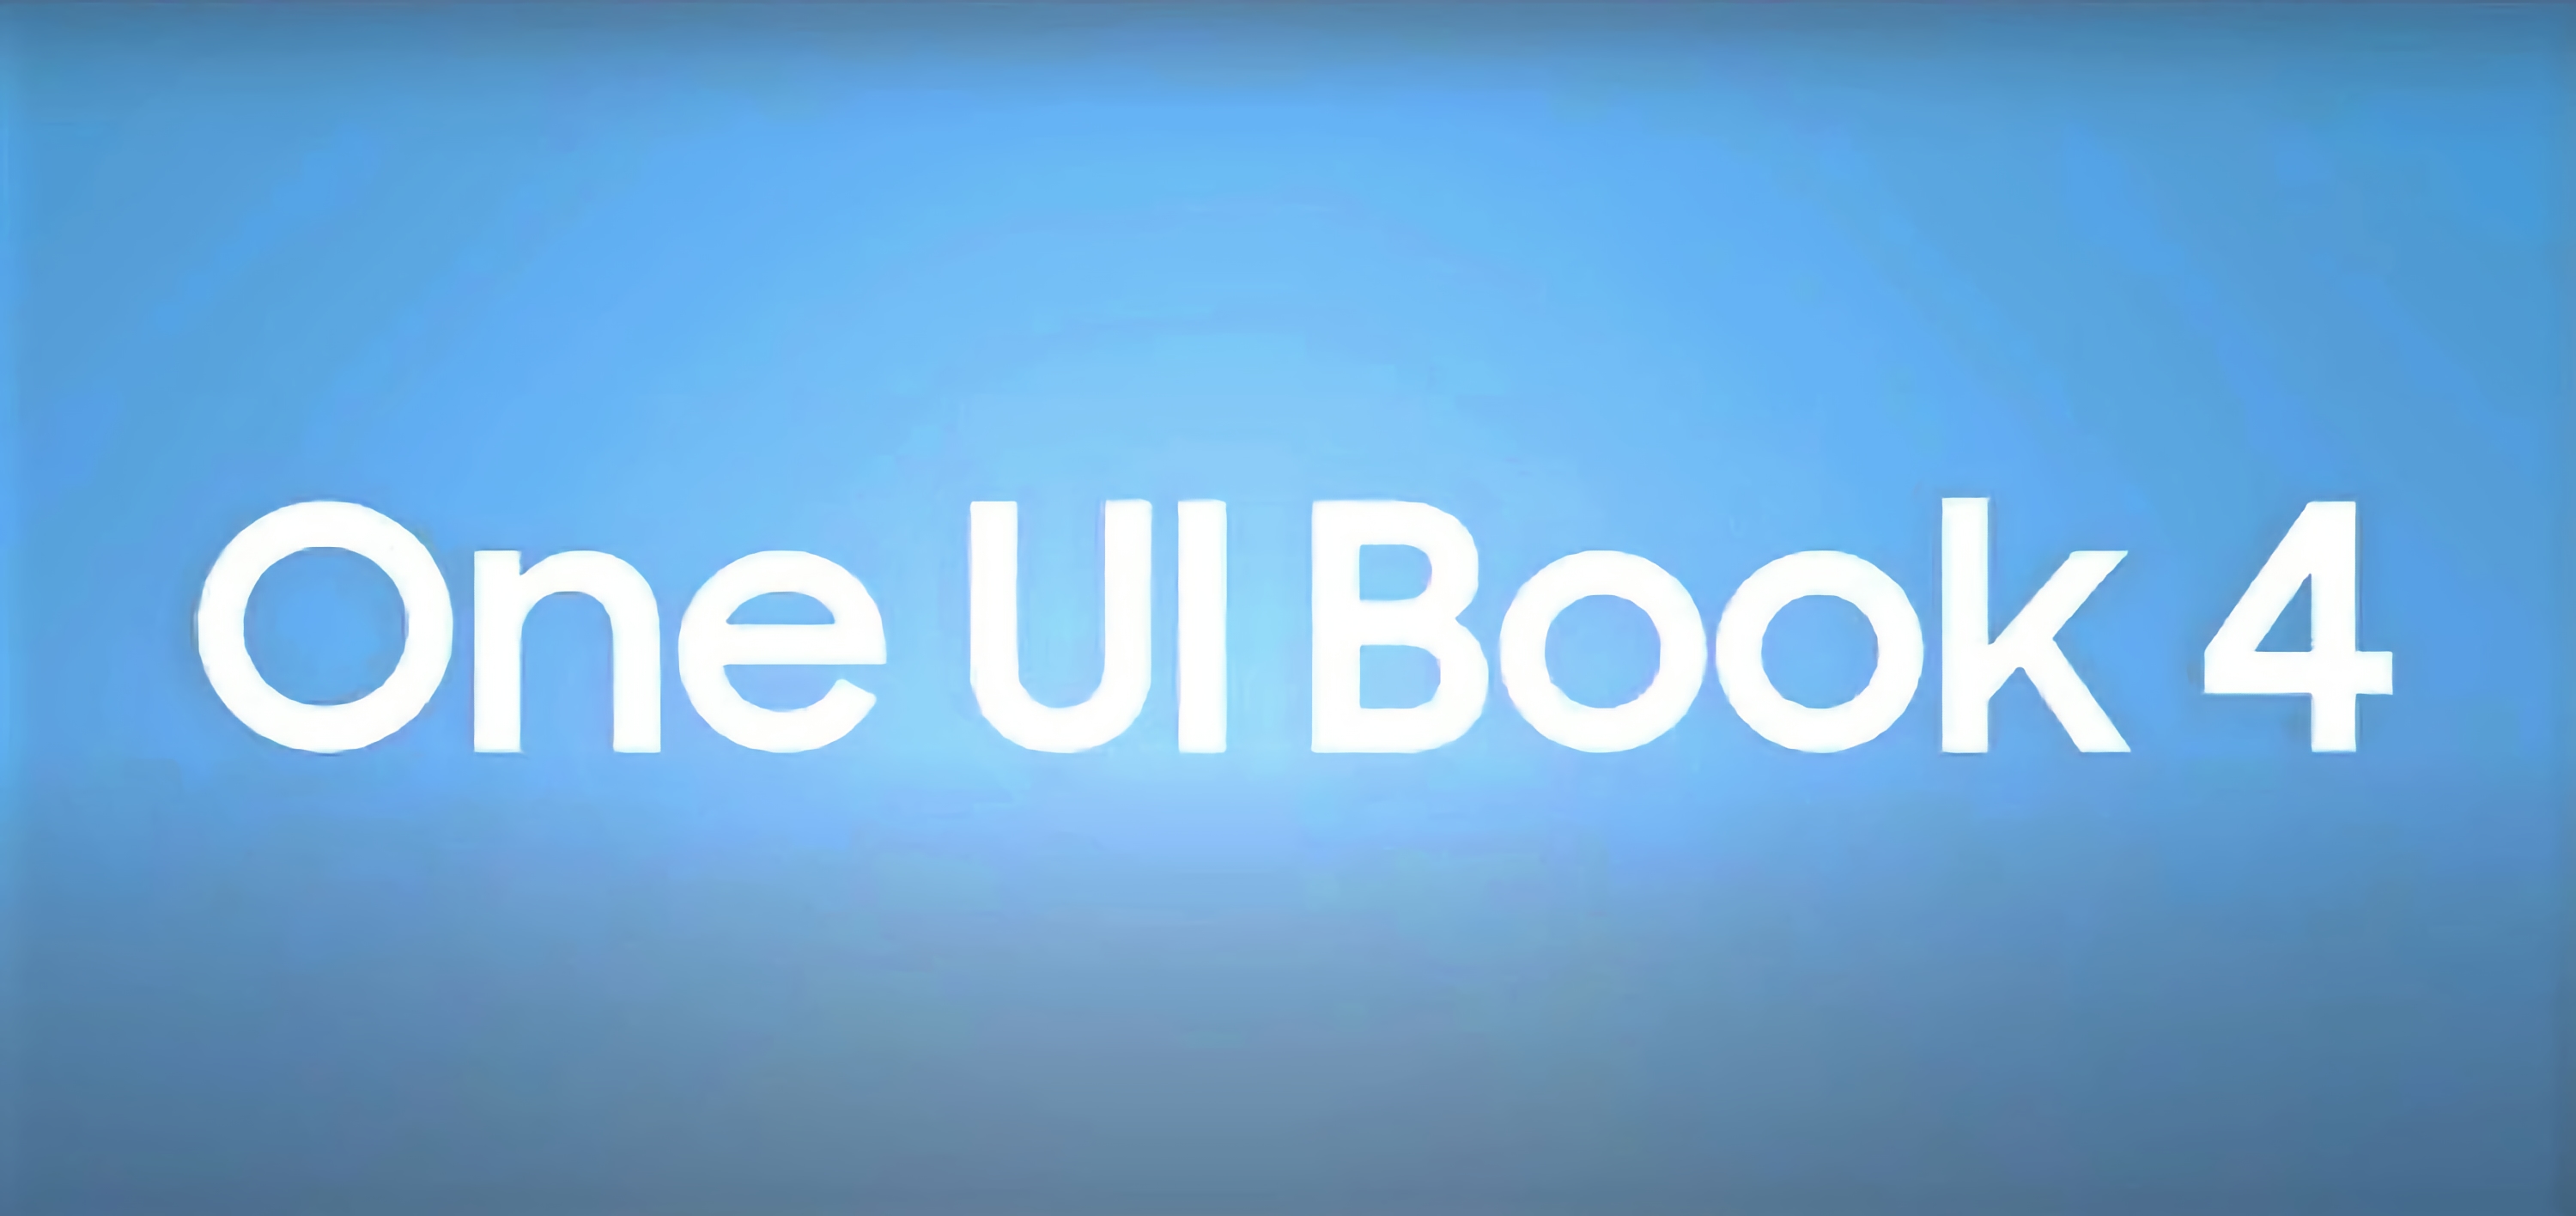 Samsung svela One UI Book 4: un guscio di marca per i portatili Windows